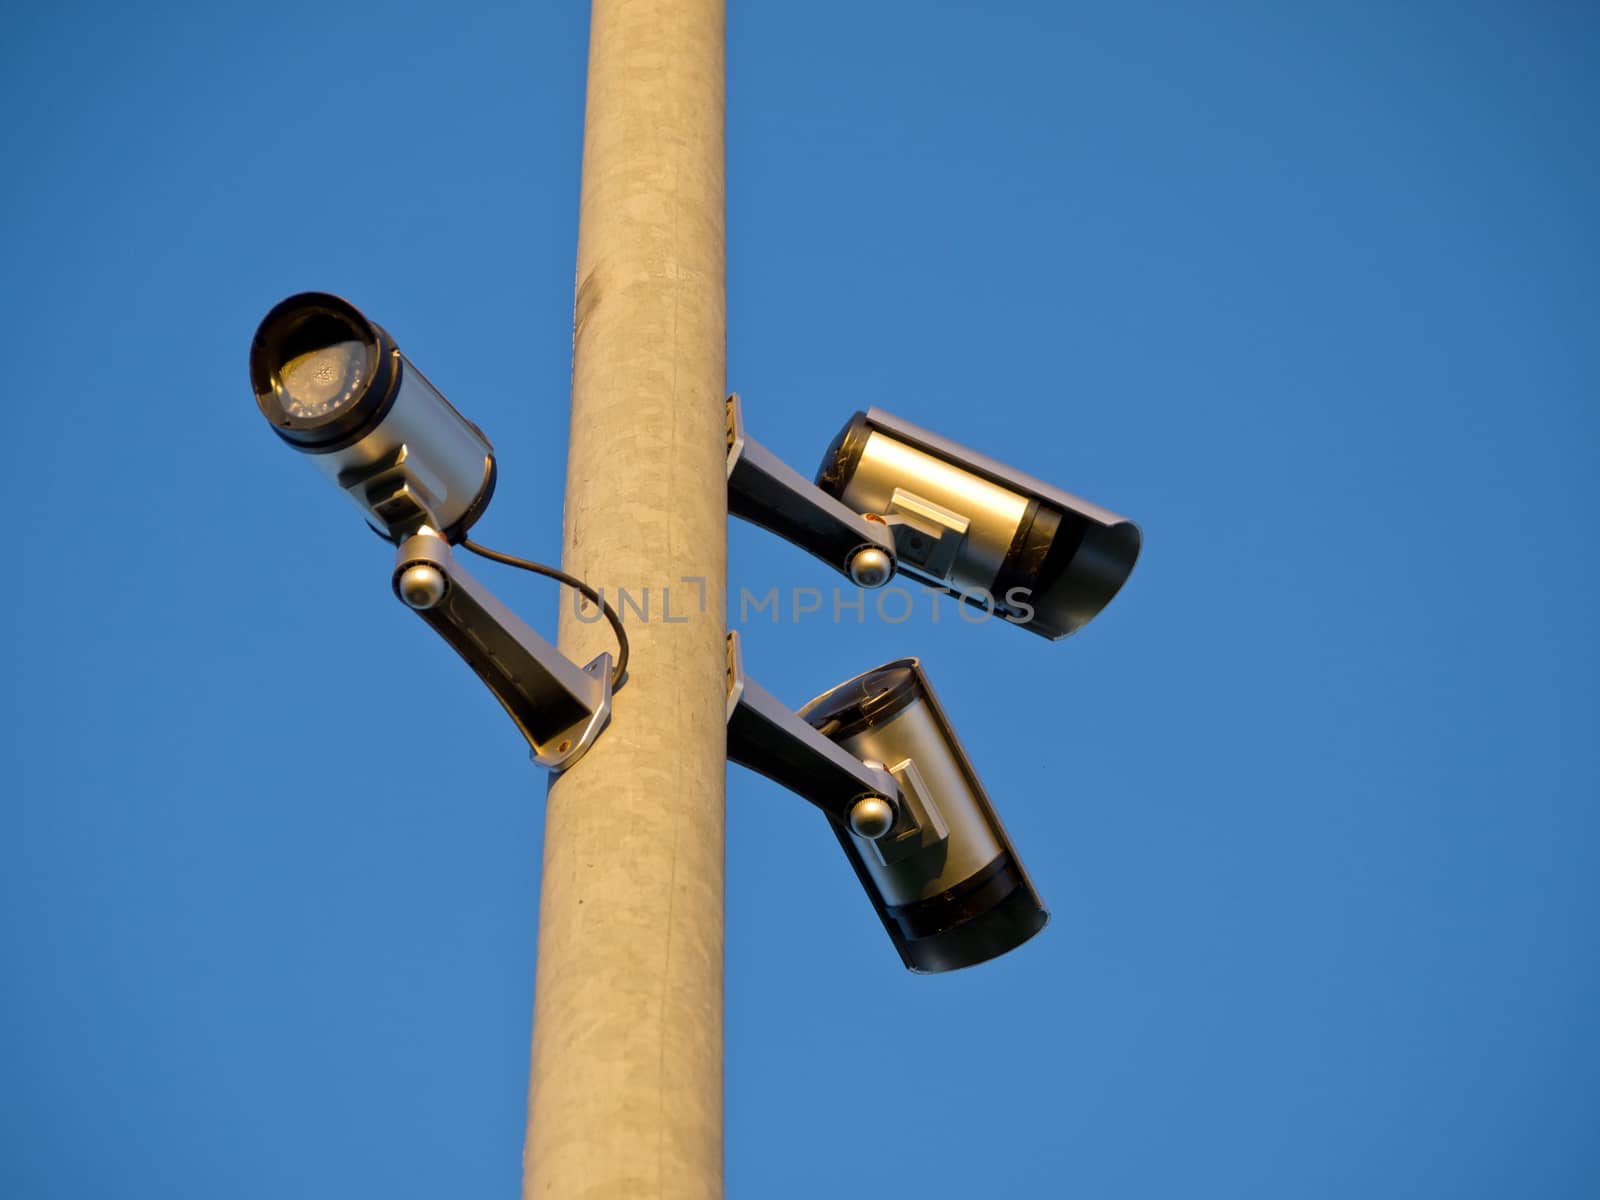 Security surveillance camera on a metal pole Big Brother